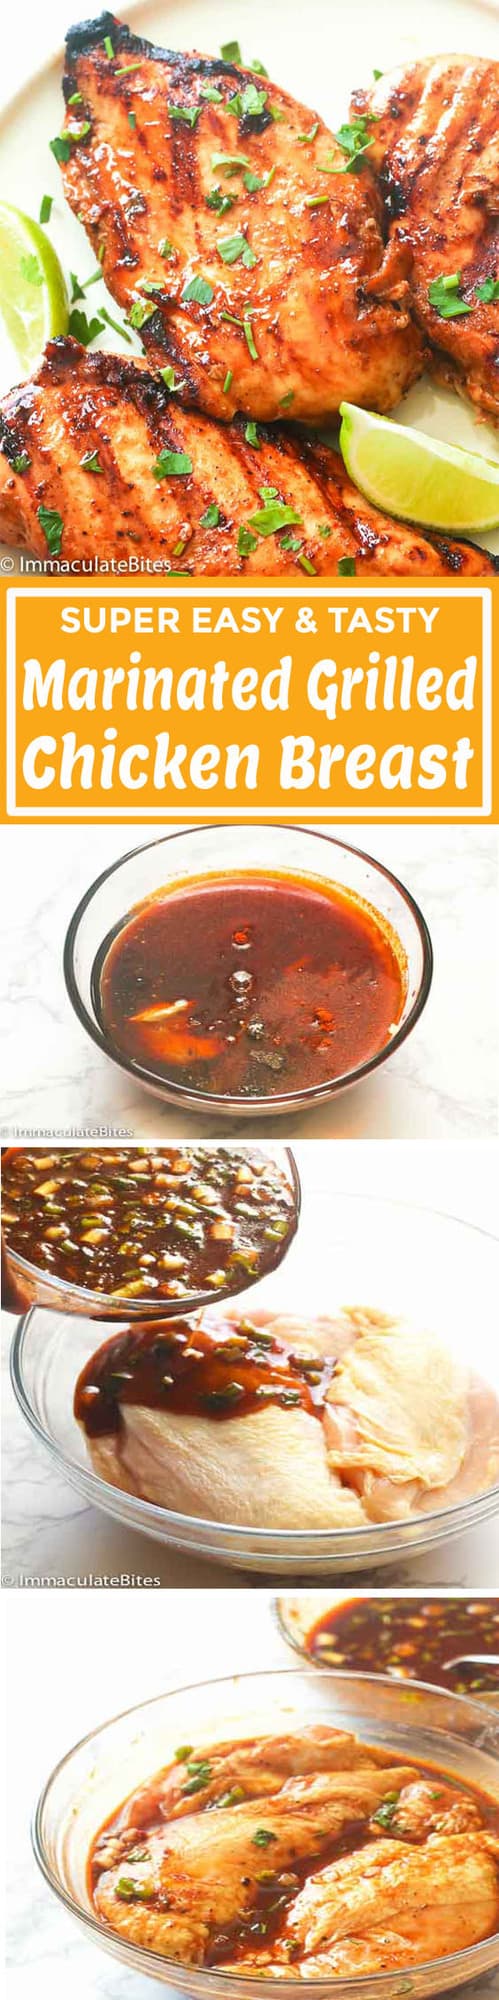 Marinated Grilled Chicken Breast